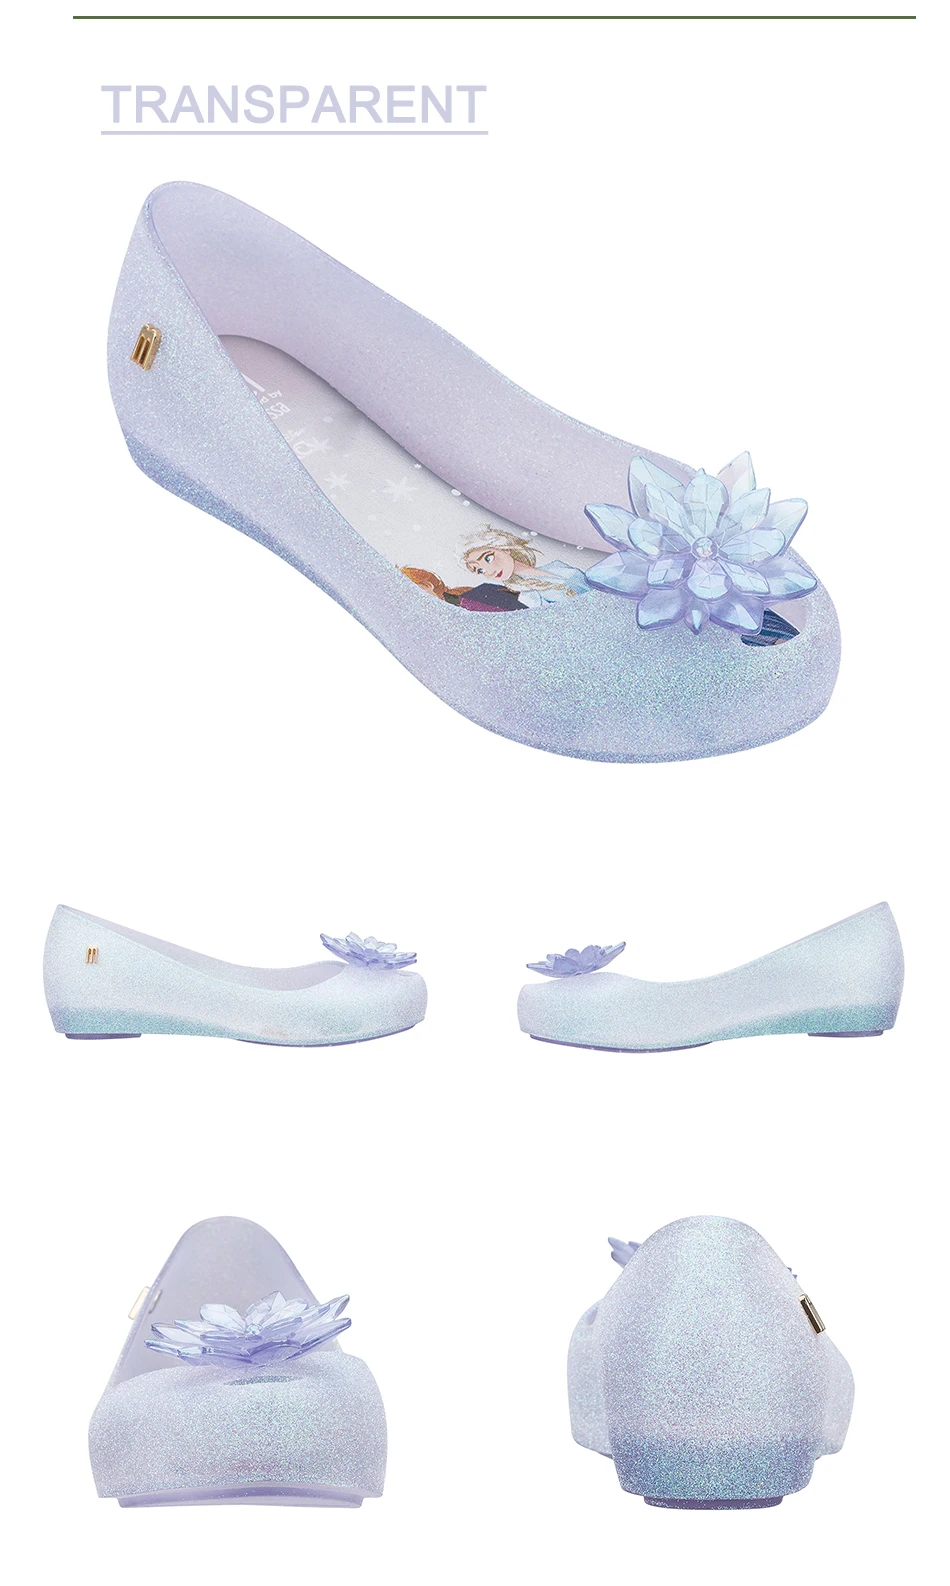 Mini Melissa Mel Ultragirl + Snow Princess Infantil Big Girls Jelly Shoes Sandals 2020 Shoes Melissa Sandals Medium Children